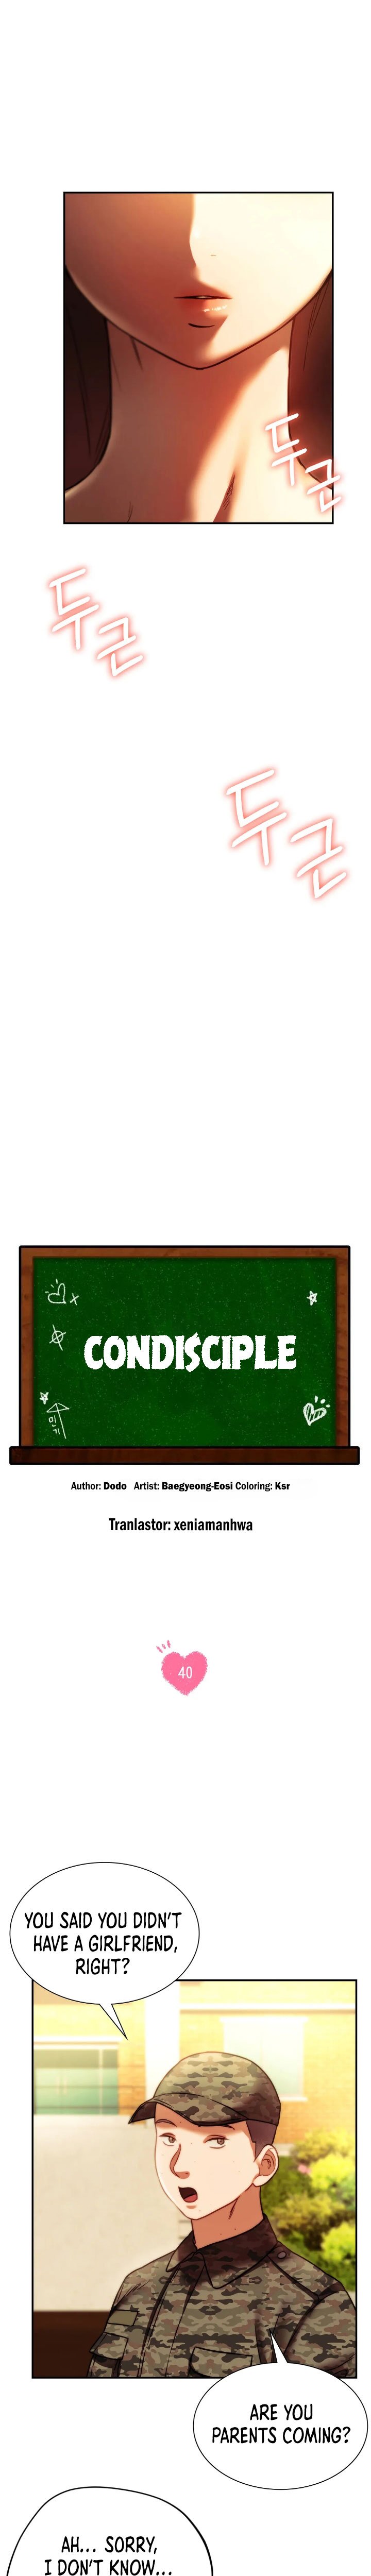 condisciple-chap-40-1